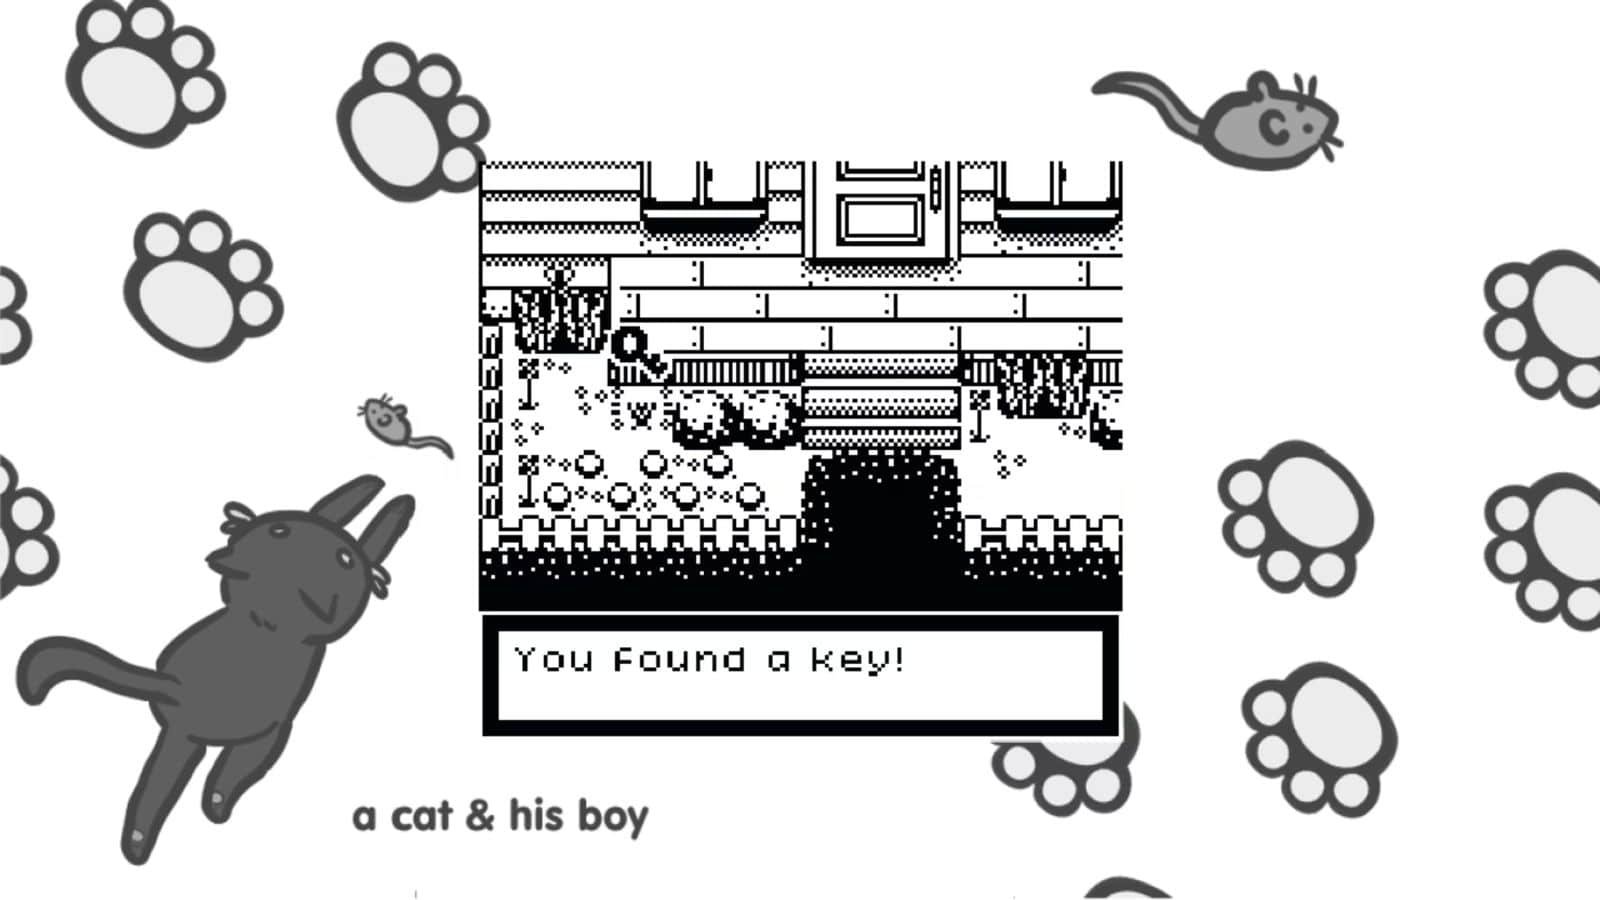 A Cat & His Boy Nintendo Switch